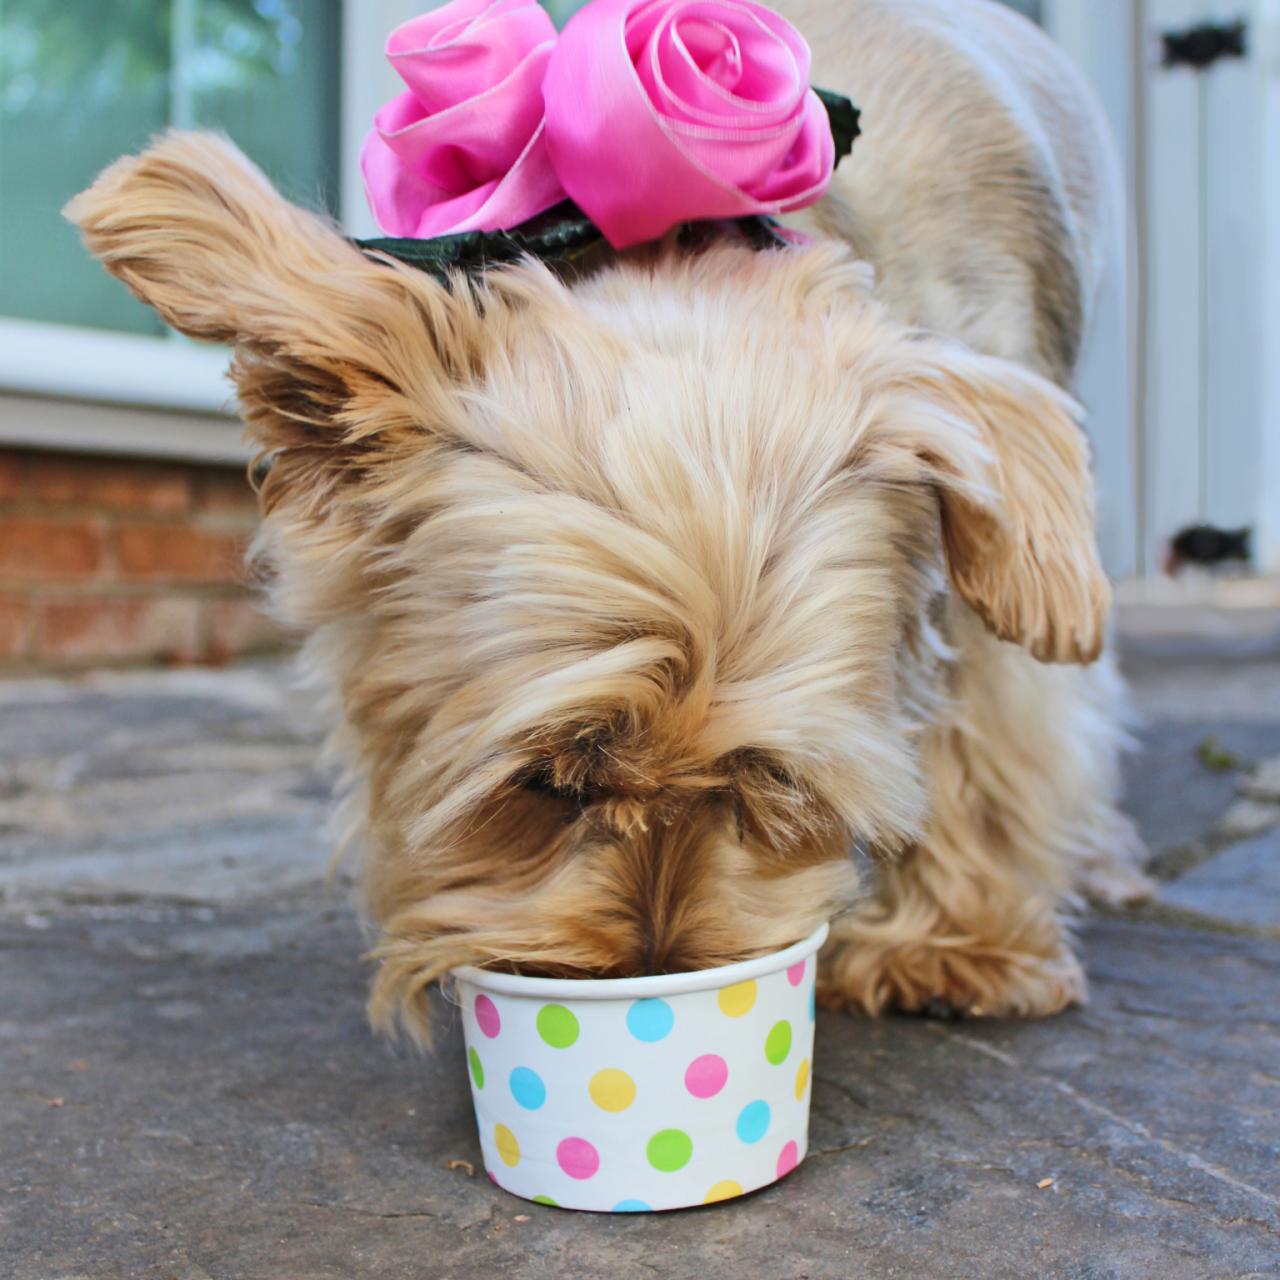 Peanut Butter Ice Cream for Dogs, HGTV Design Blog – Design Happens